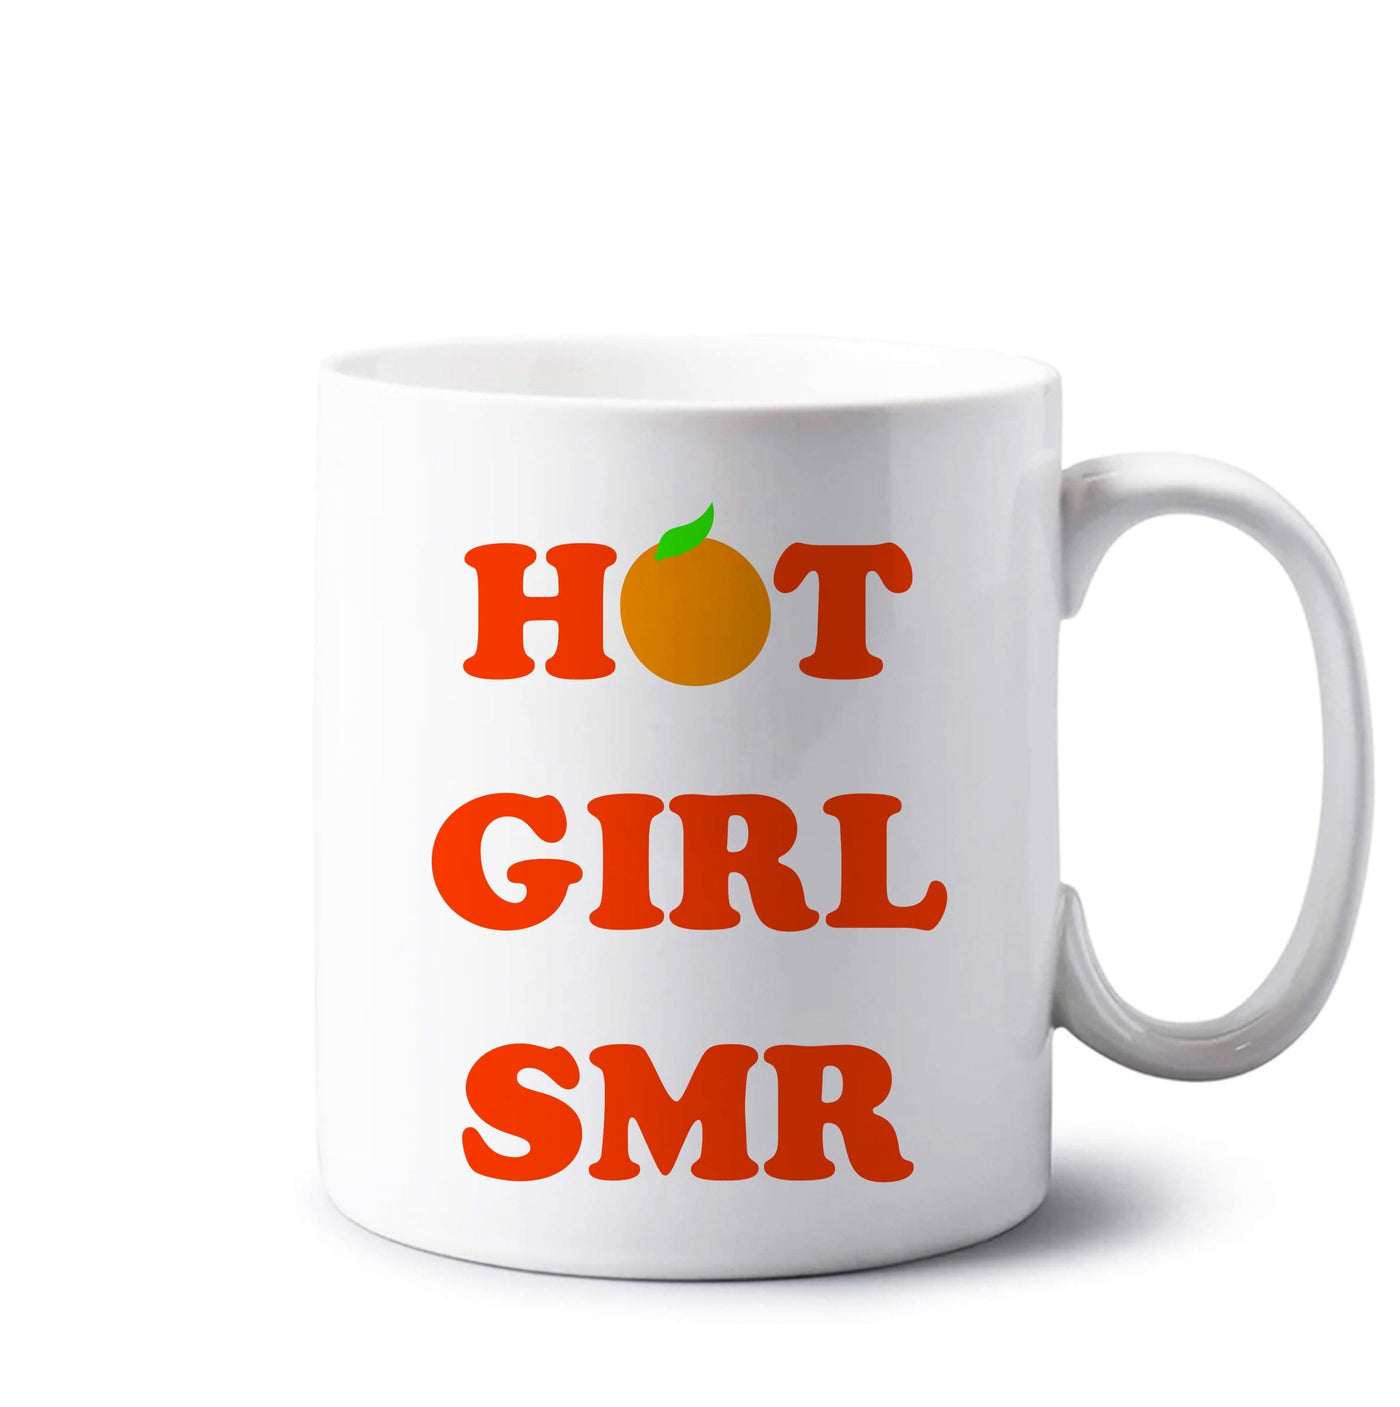 Hot Girl SMR - Summer Mug